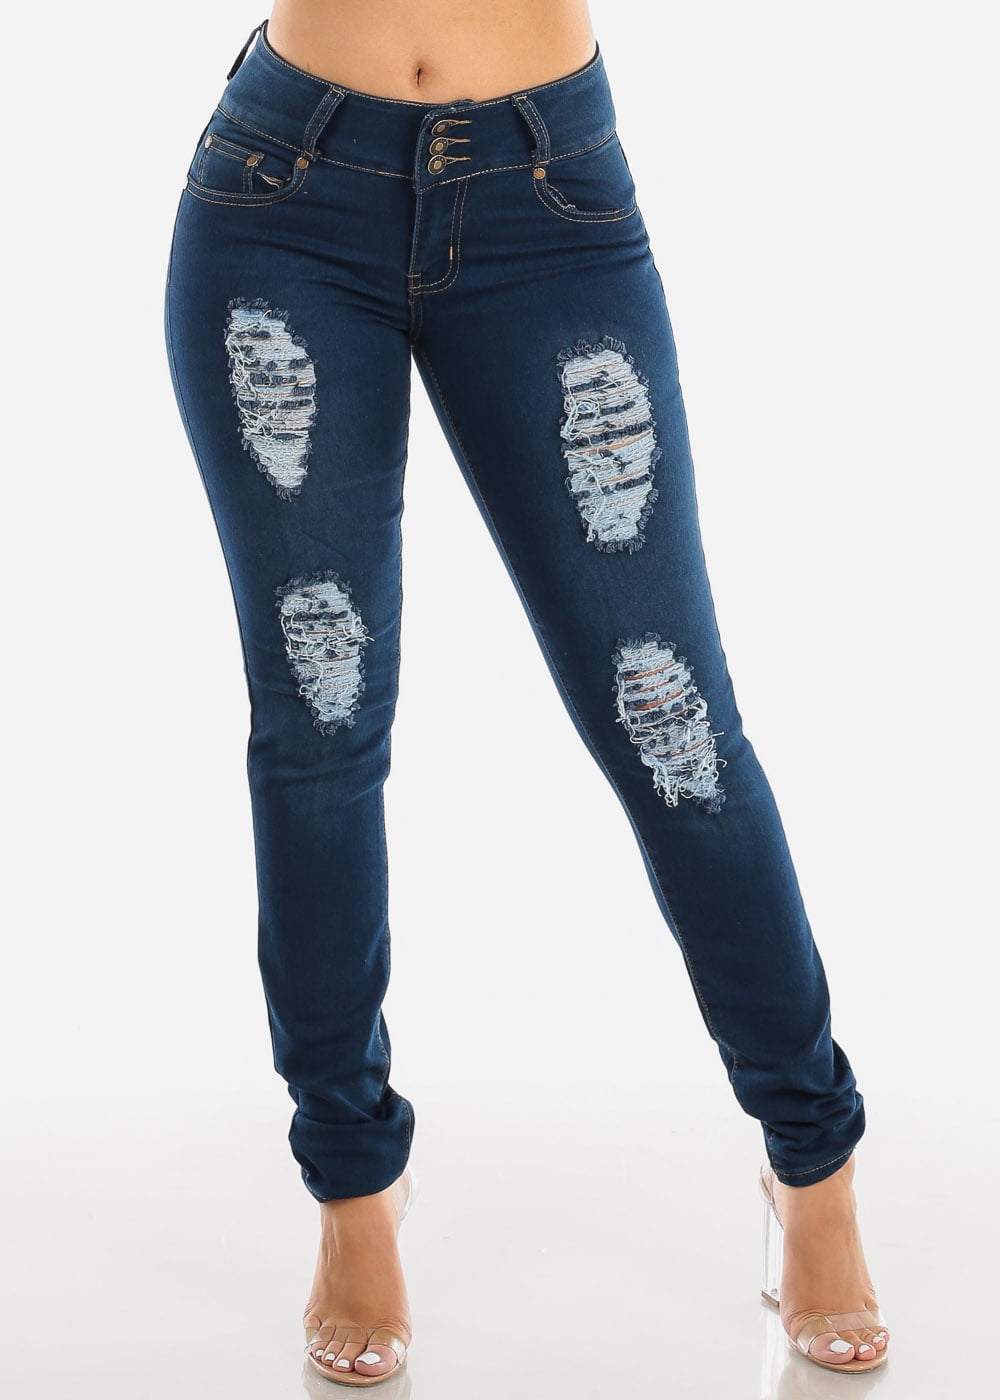 Moda Xpress - Womens Skinny Jeans Distressed Torn Mid Rise BUTT LIFTING ...